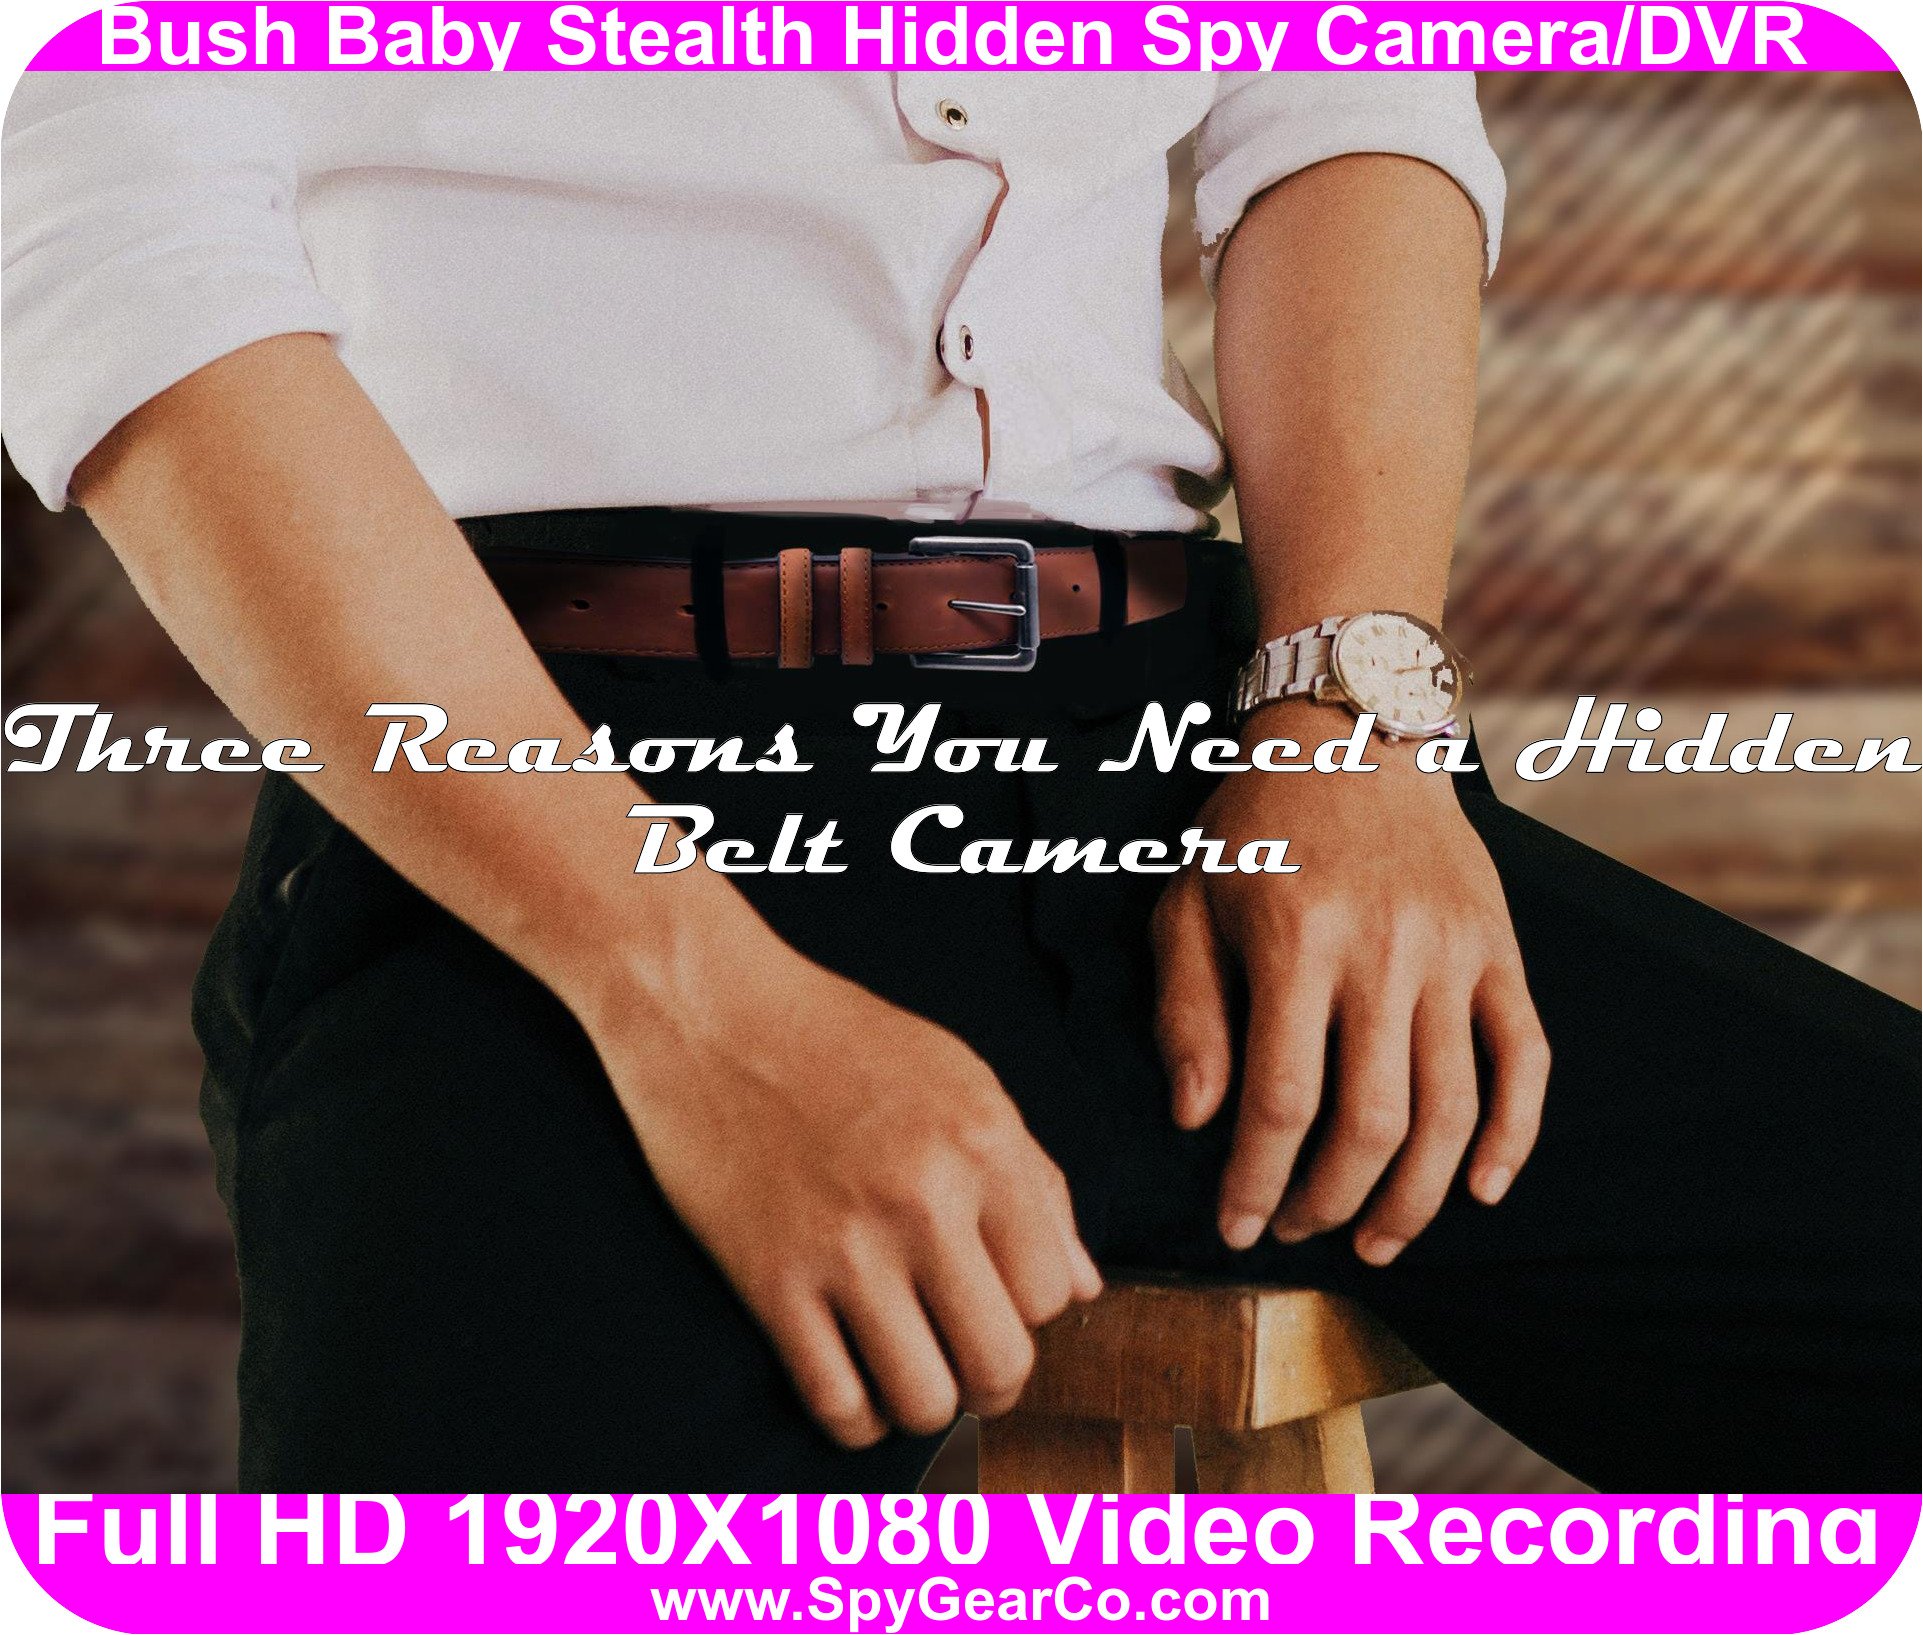 Bush Baby Stealth Hidden Spy Camera/DVR